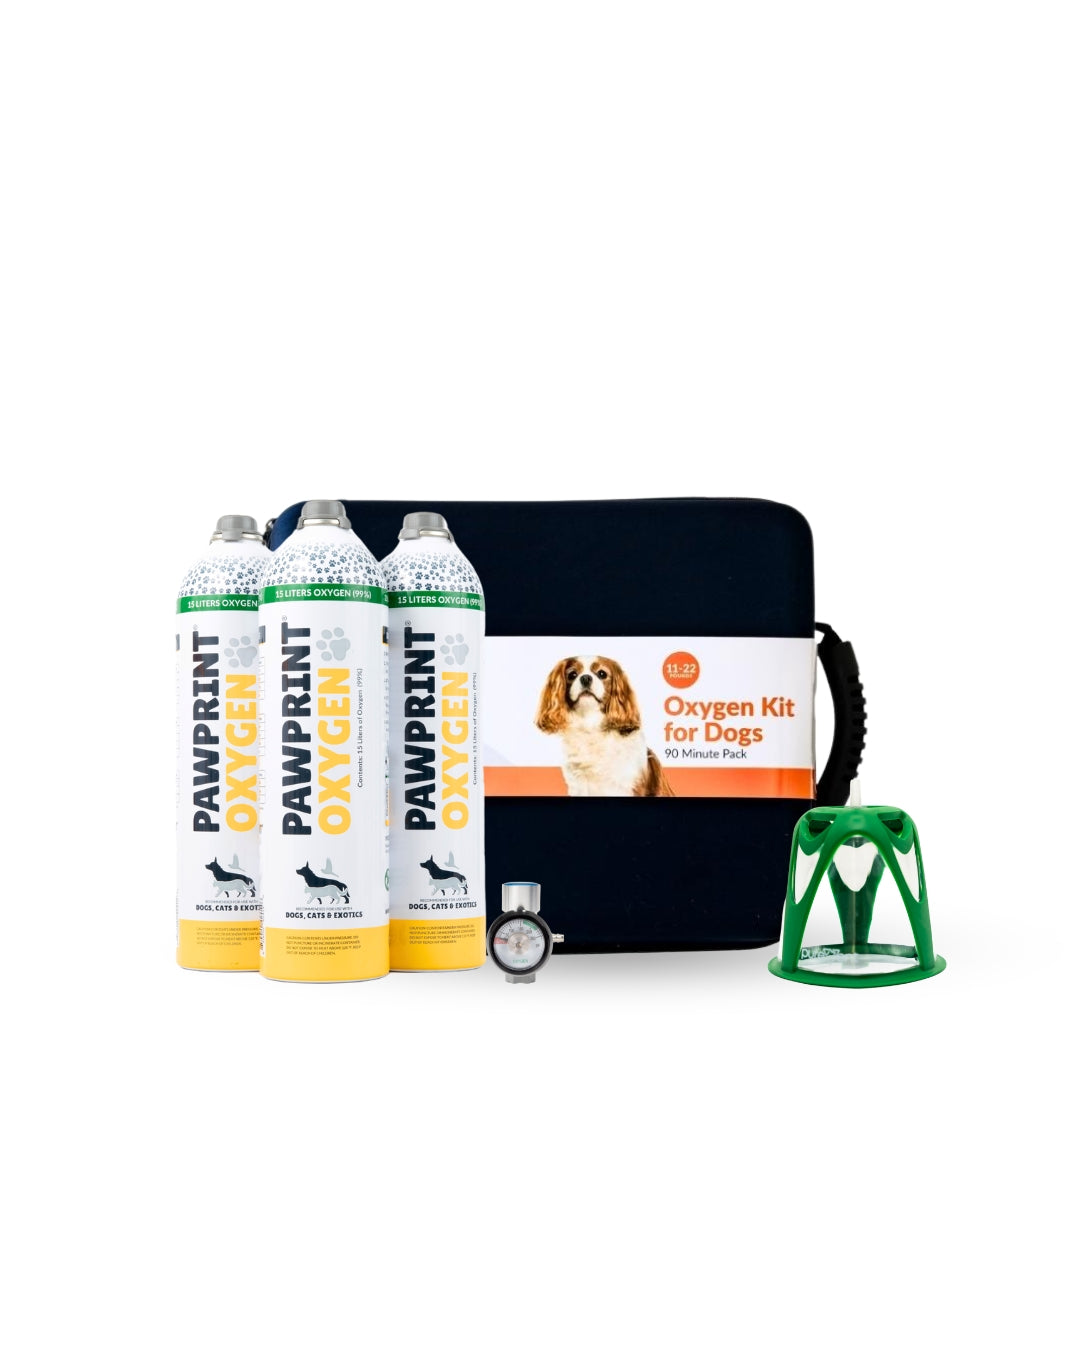 Oxygen Kit for Dogs